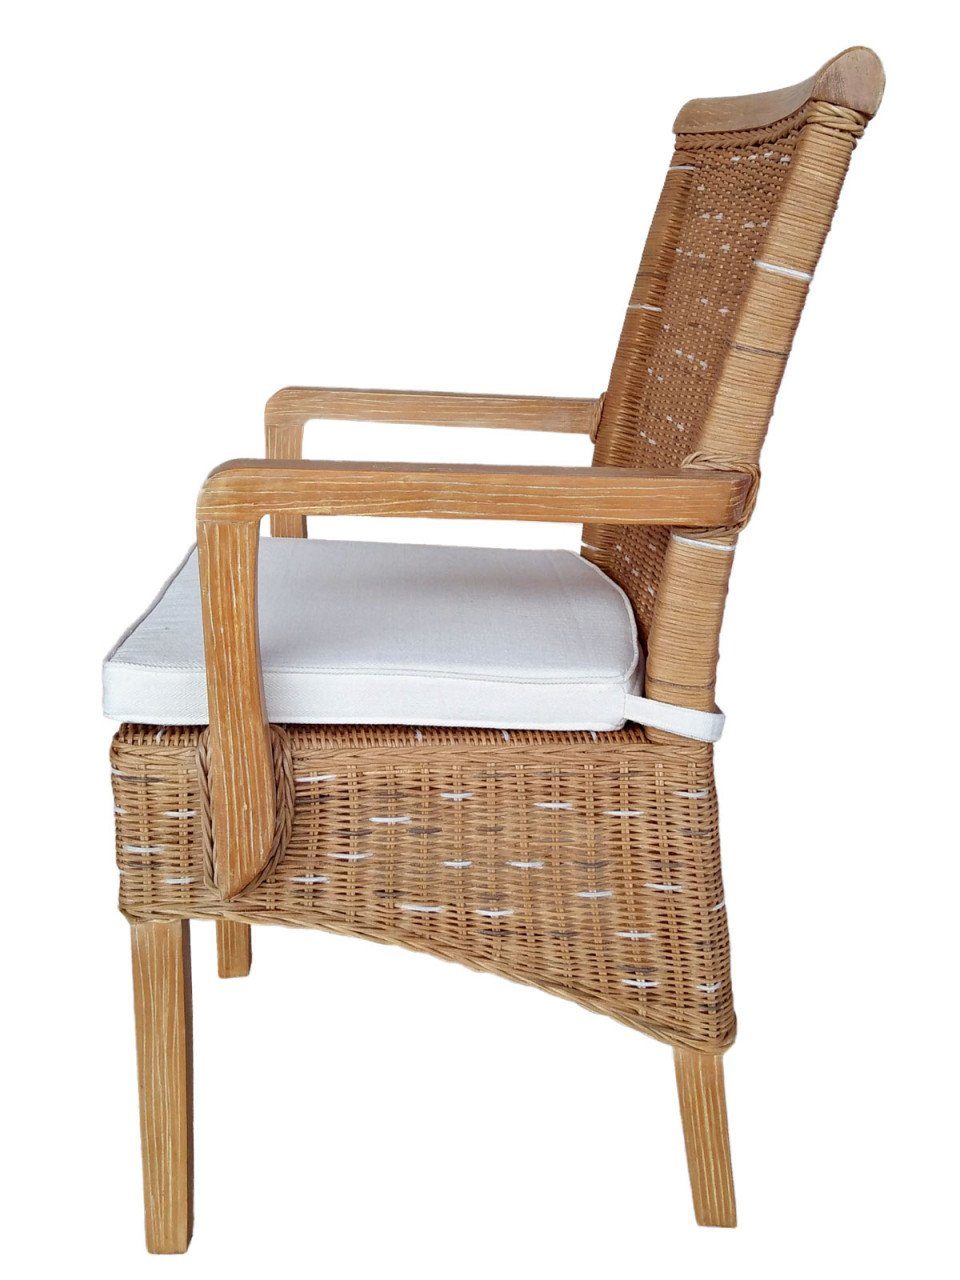 Soma Esszimmer-Stühle-Set Sessel weiß Rattanstuhl b, Sitzmöbel Armlehnen soma Stück Stuhl Sessel od. 2 Sitzplatz mit